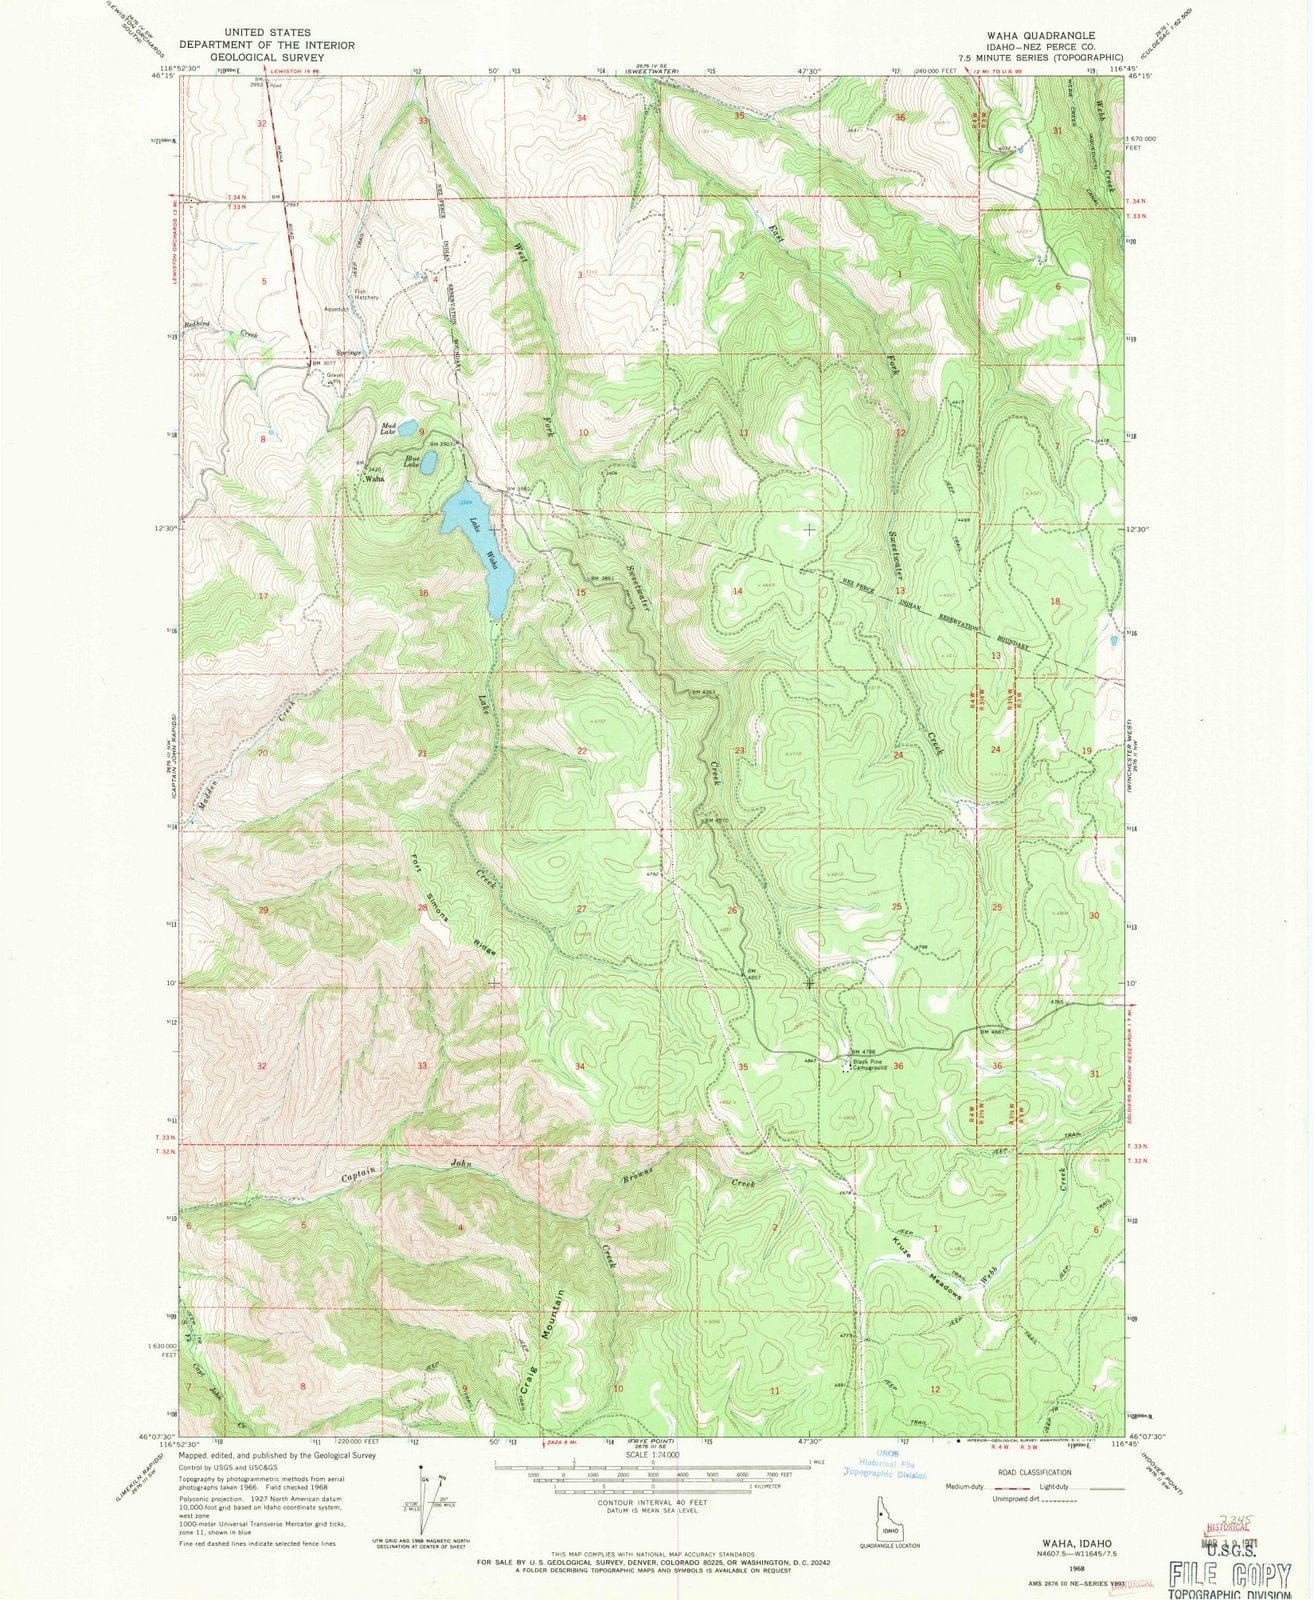 1968 Waha, ID - Idaho - USGS Topographic Map